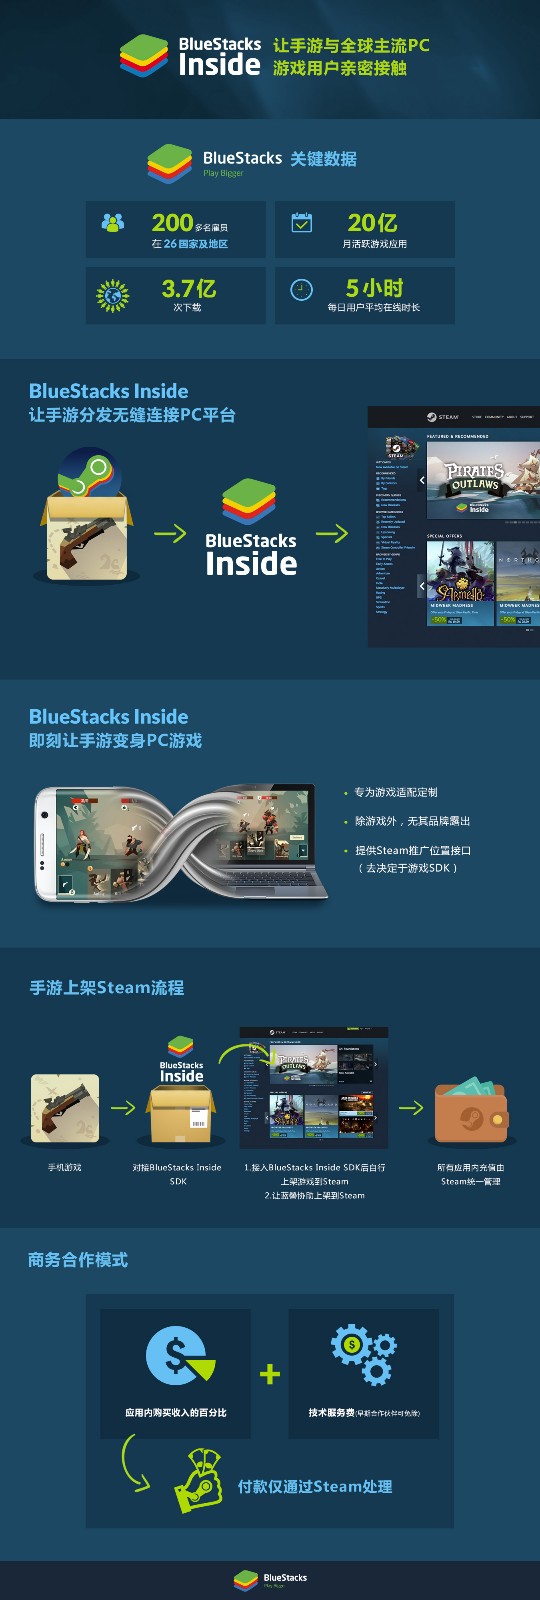 steam_press_China.jpg